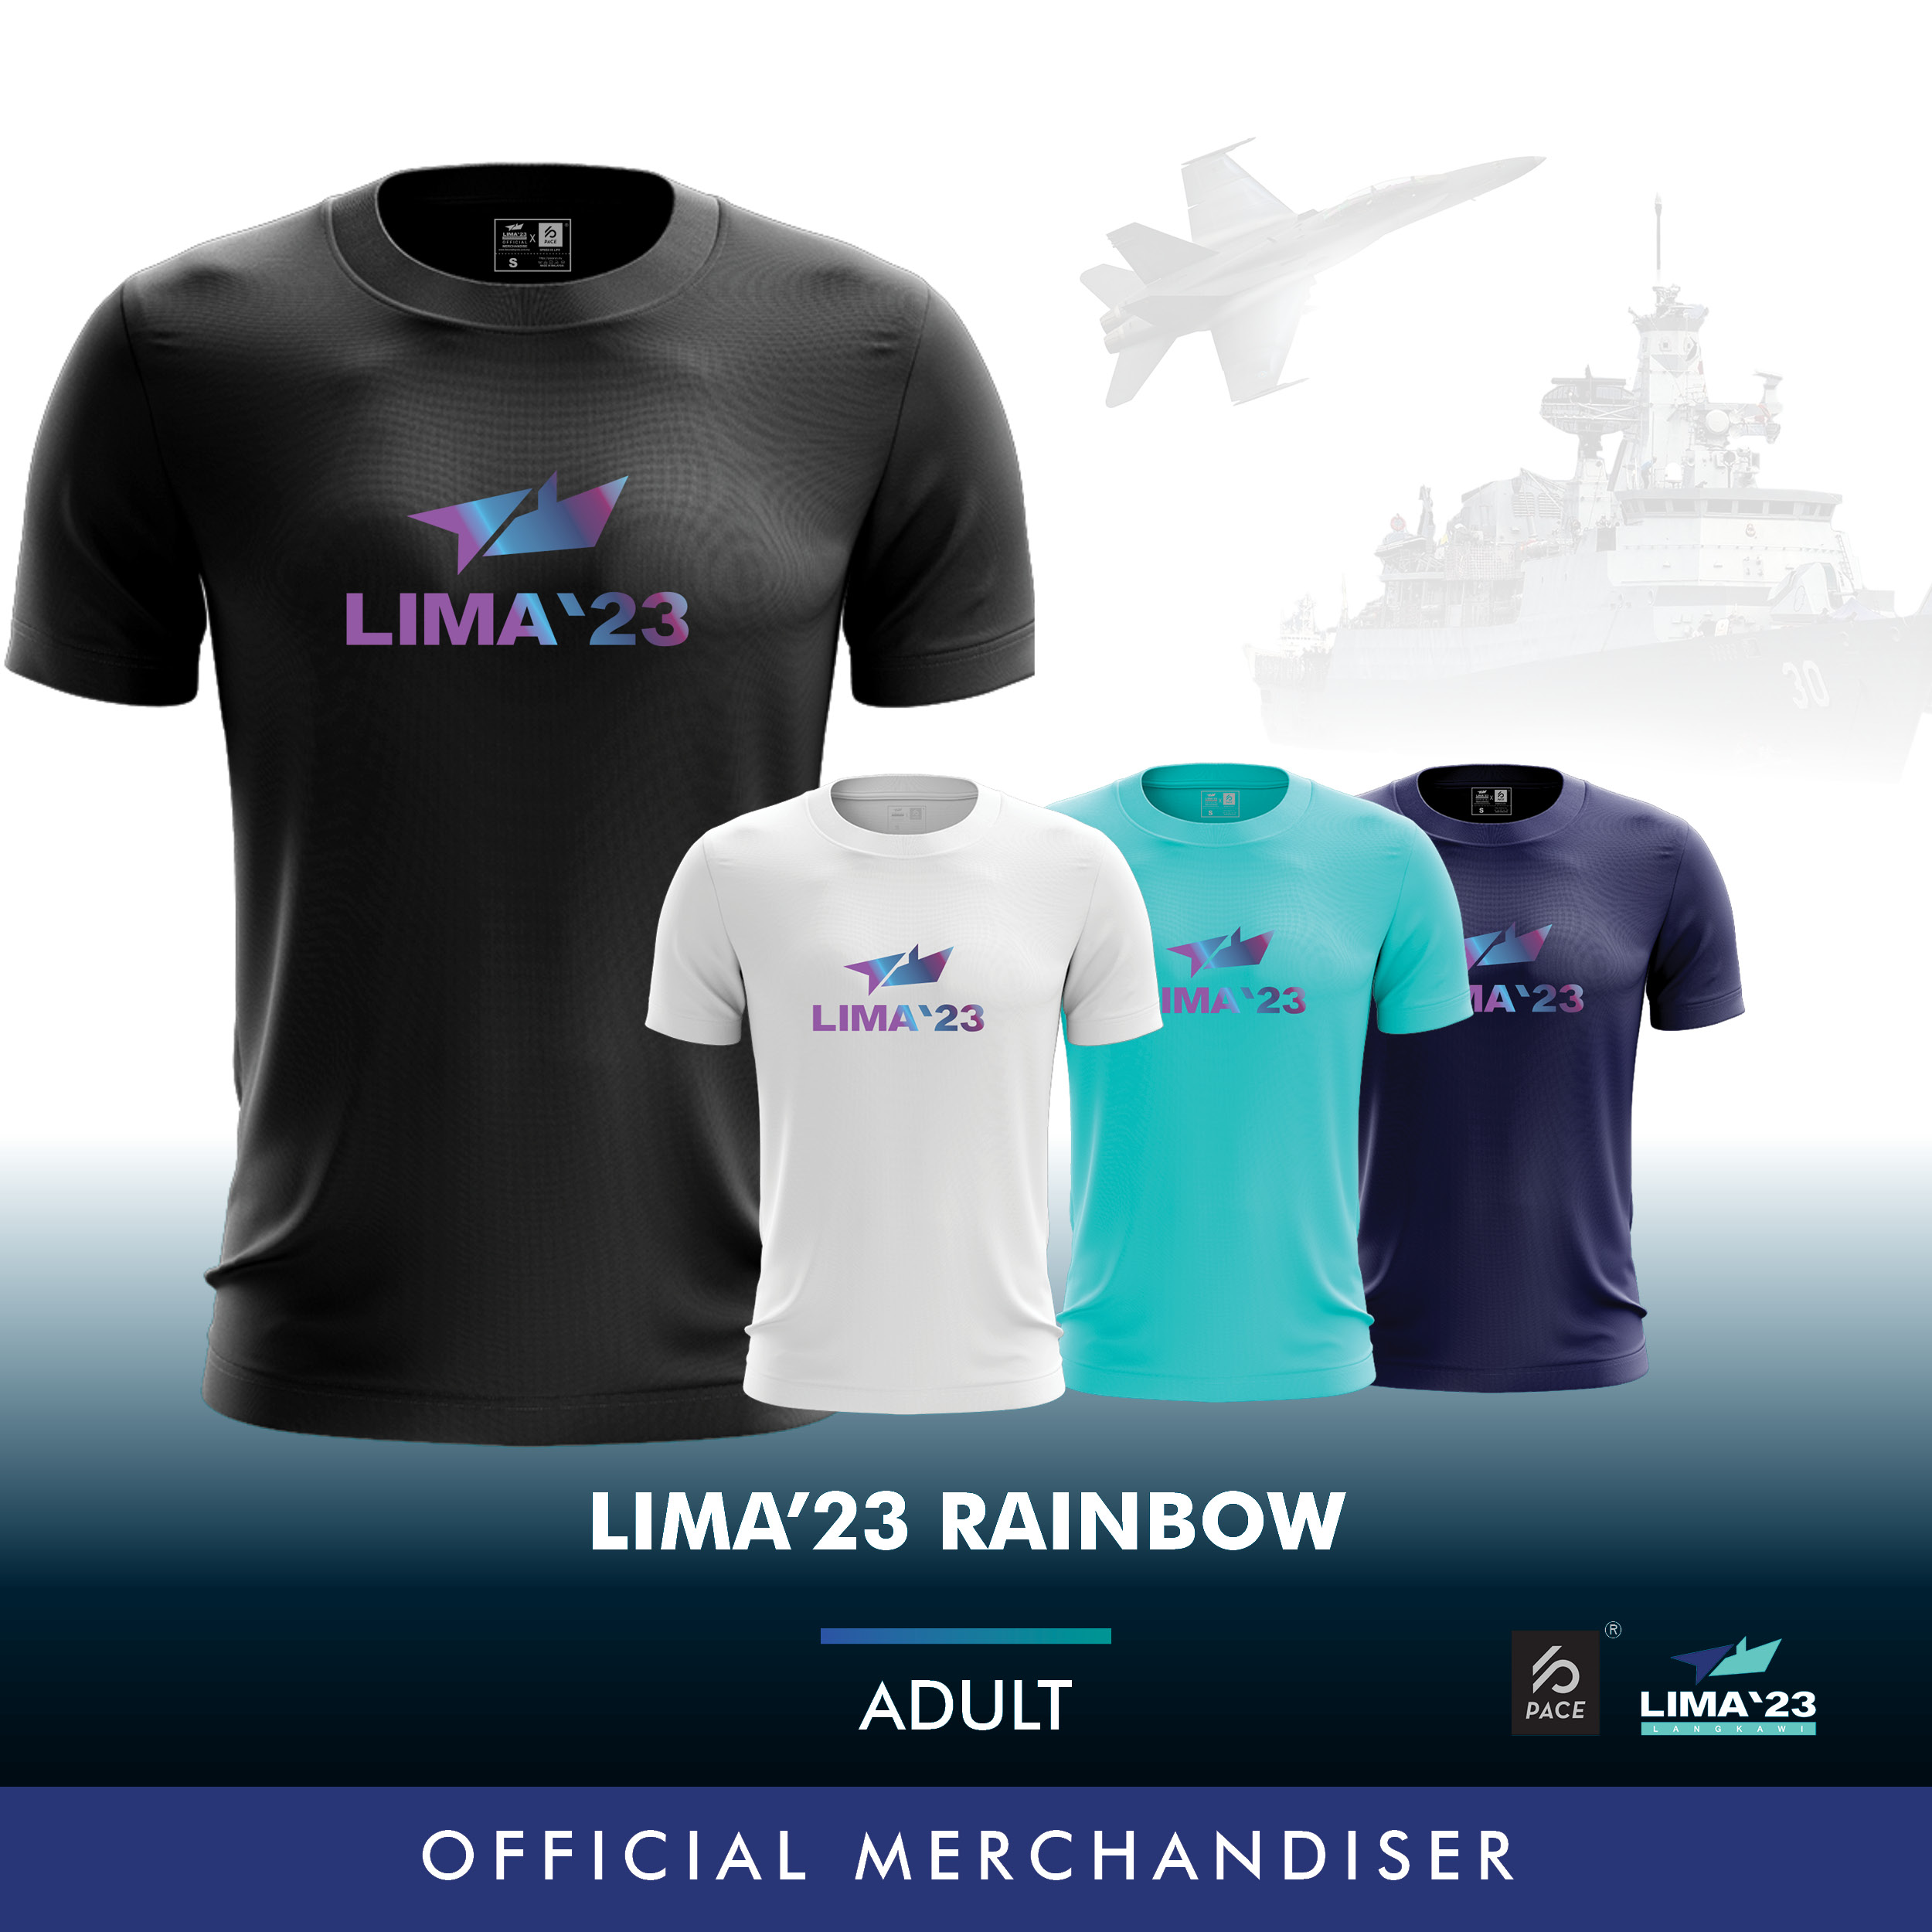 LIMA'23 Rainbow Reflective Tee Shirt Black, White, Navy & Tiffanny Blue